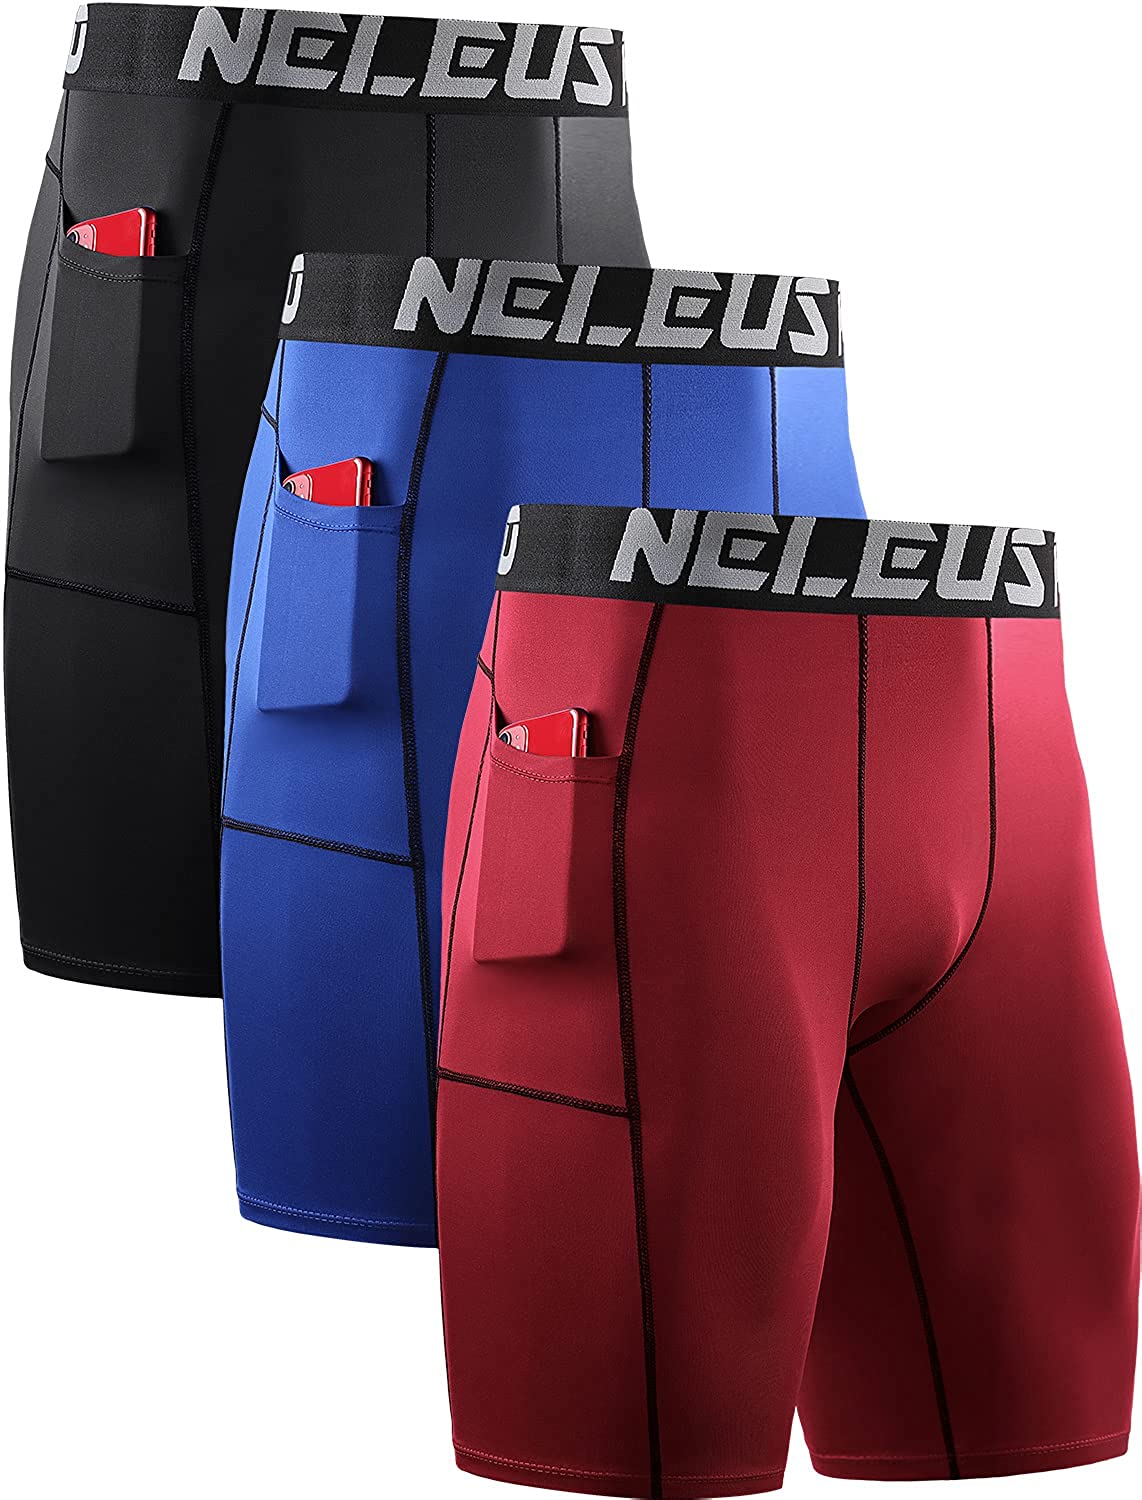 Neleus Plus-Sized Clothing On Sale Up To 90% Off Retail